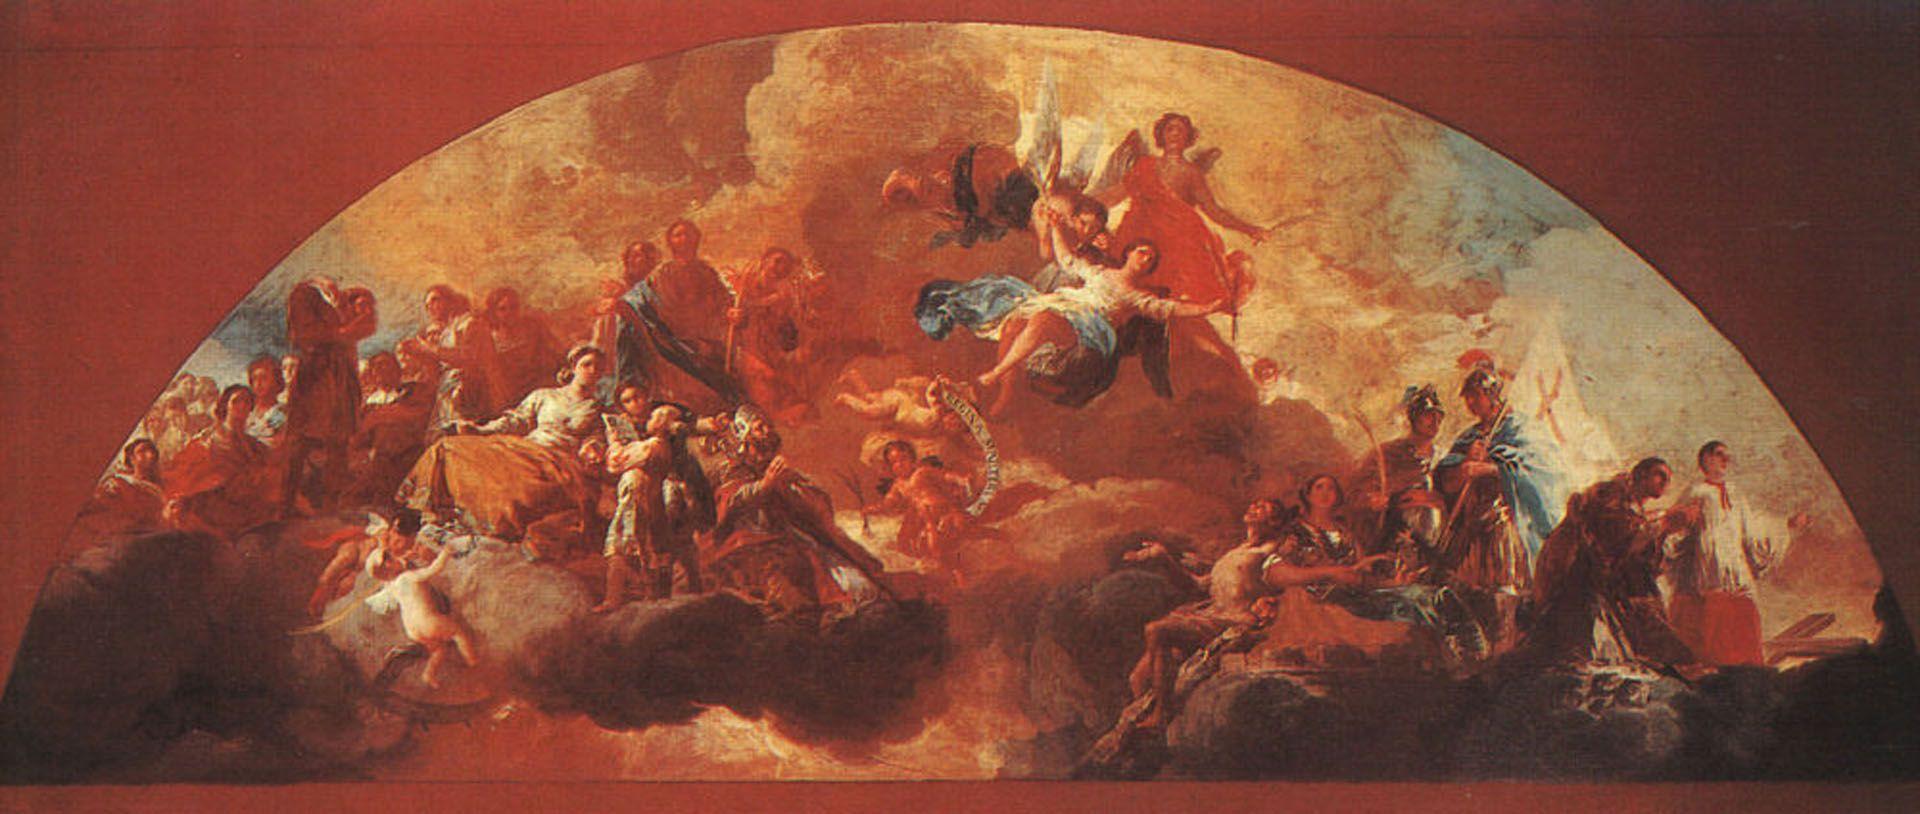 Virgin Mary As Queen Of Martyrs Goya Wallpaper Image